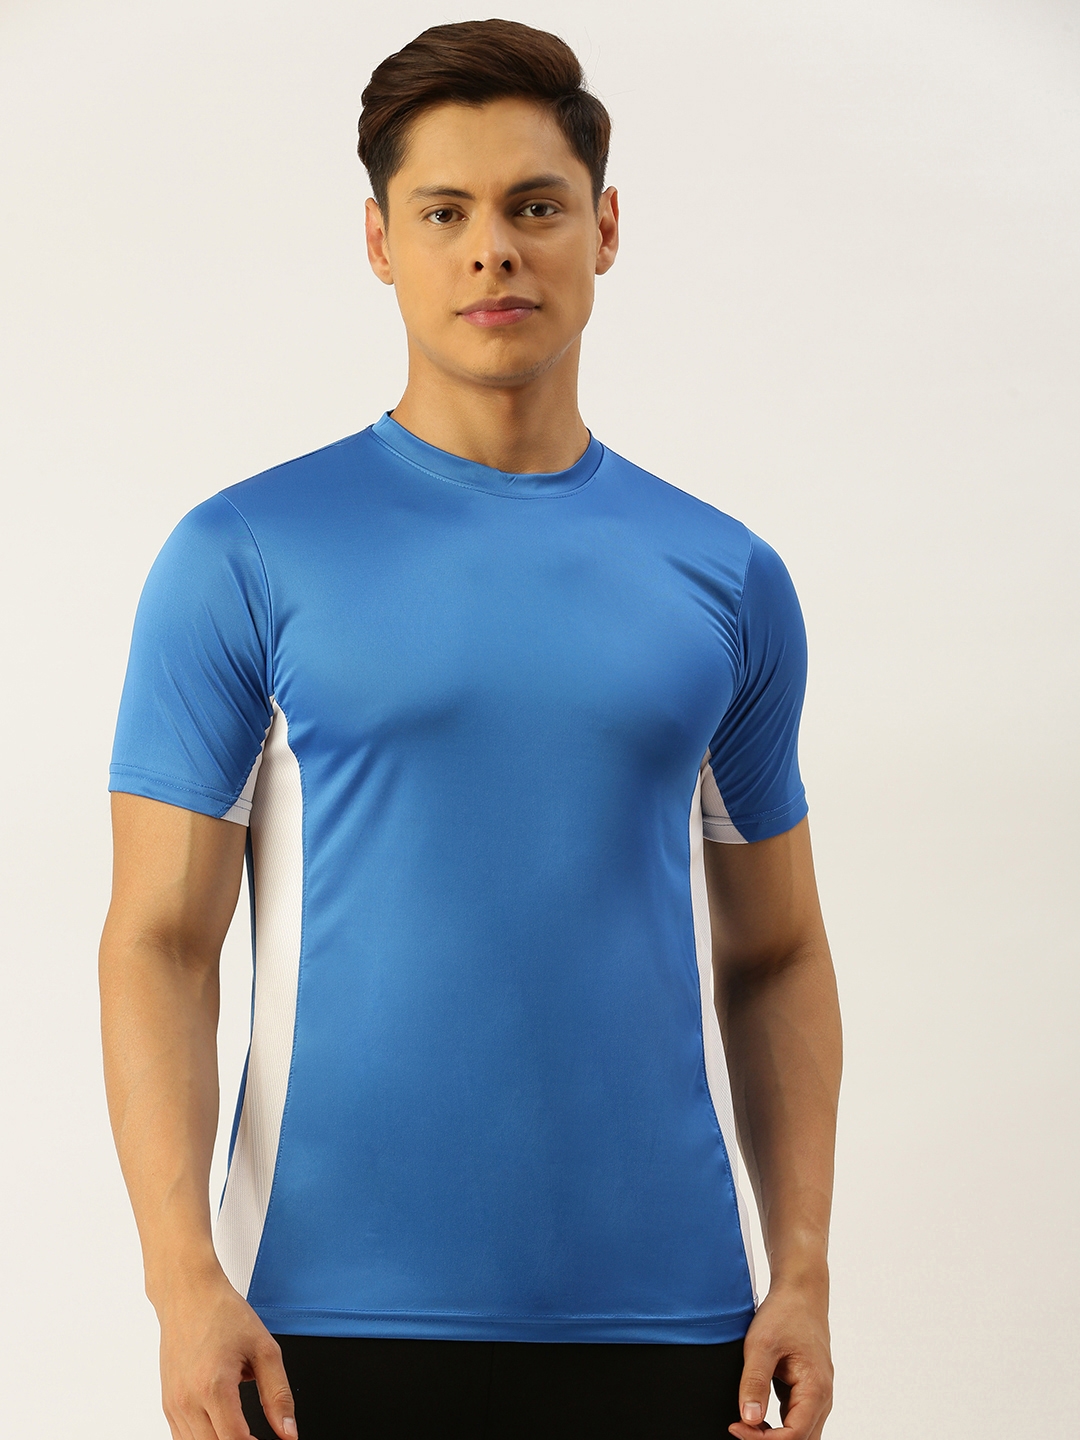 Campus Sutra Men Blue Solid Round Neck Sports T shirt